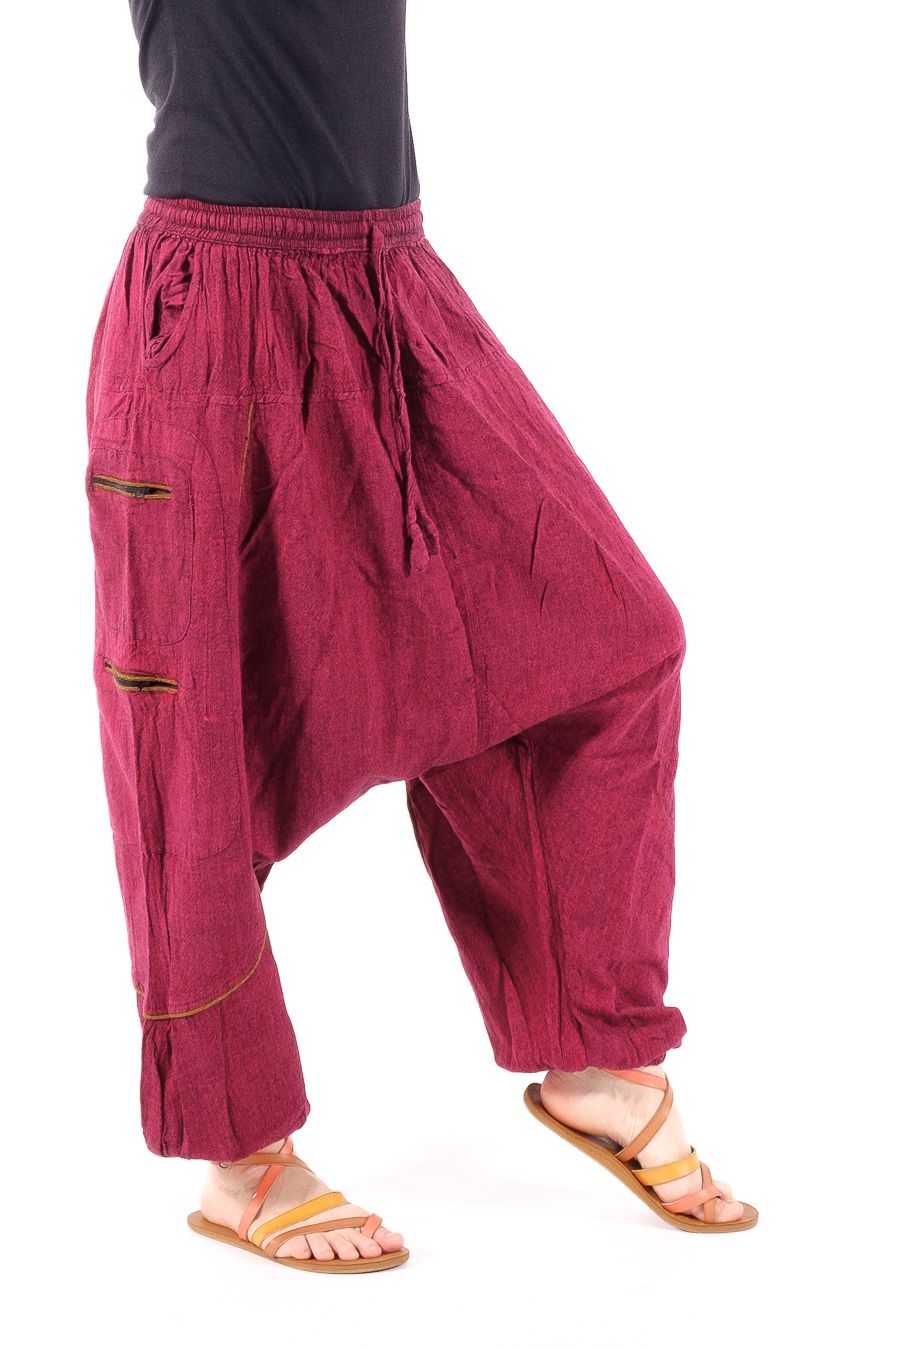 UNISEX turecké kalhoty RAMA z Nepálu z lehčího materiálu - NT0053-28B-019 KENAVI